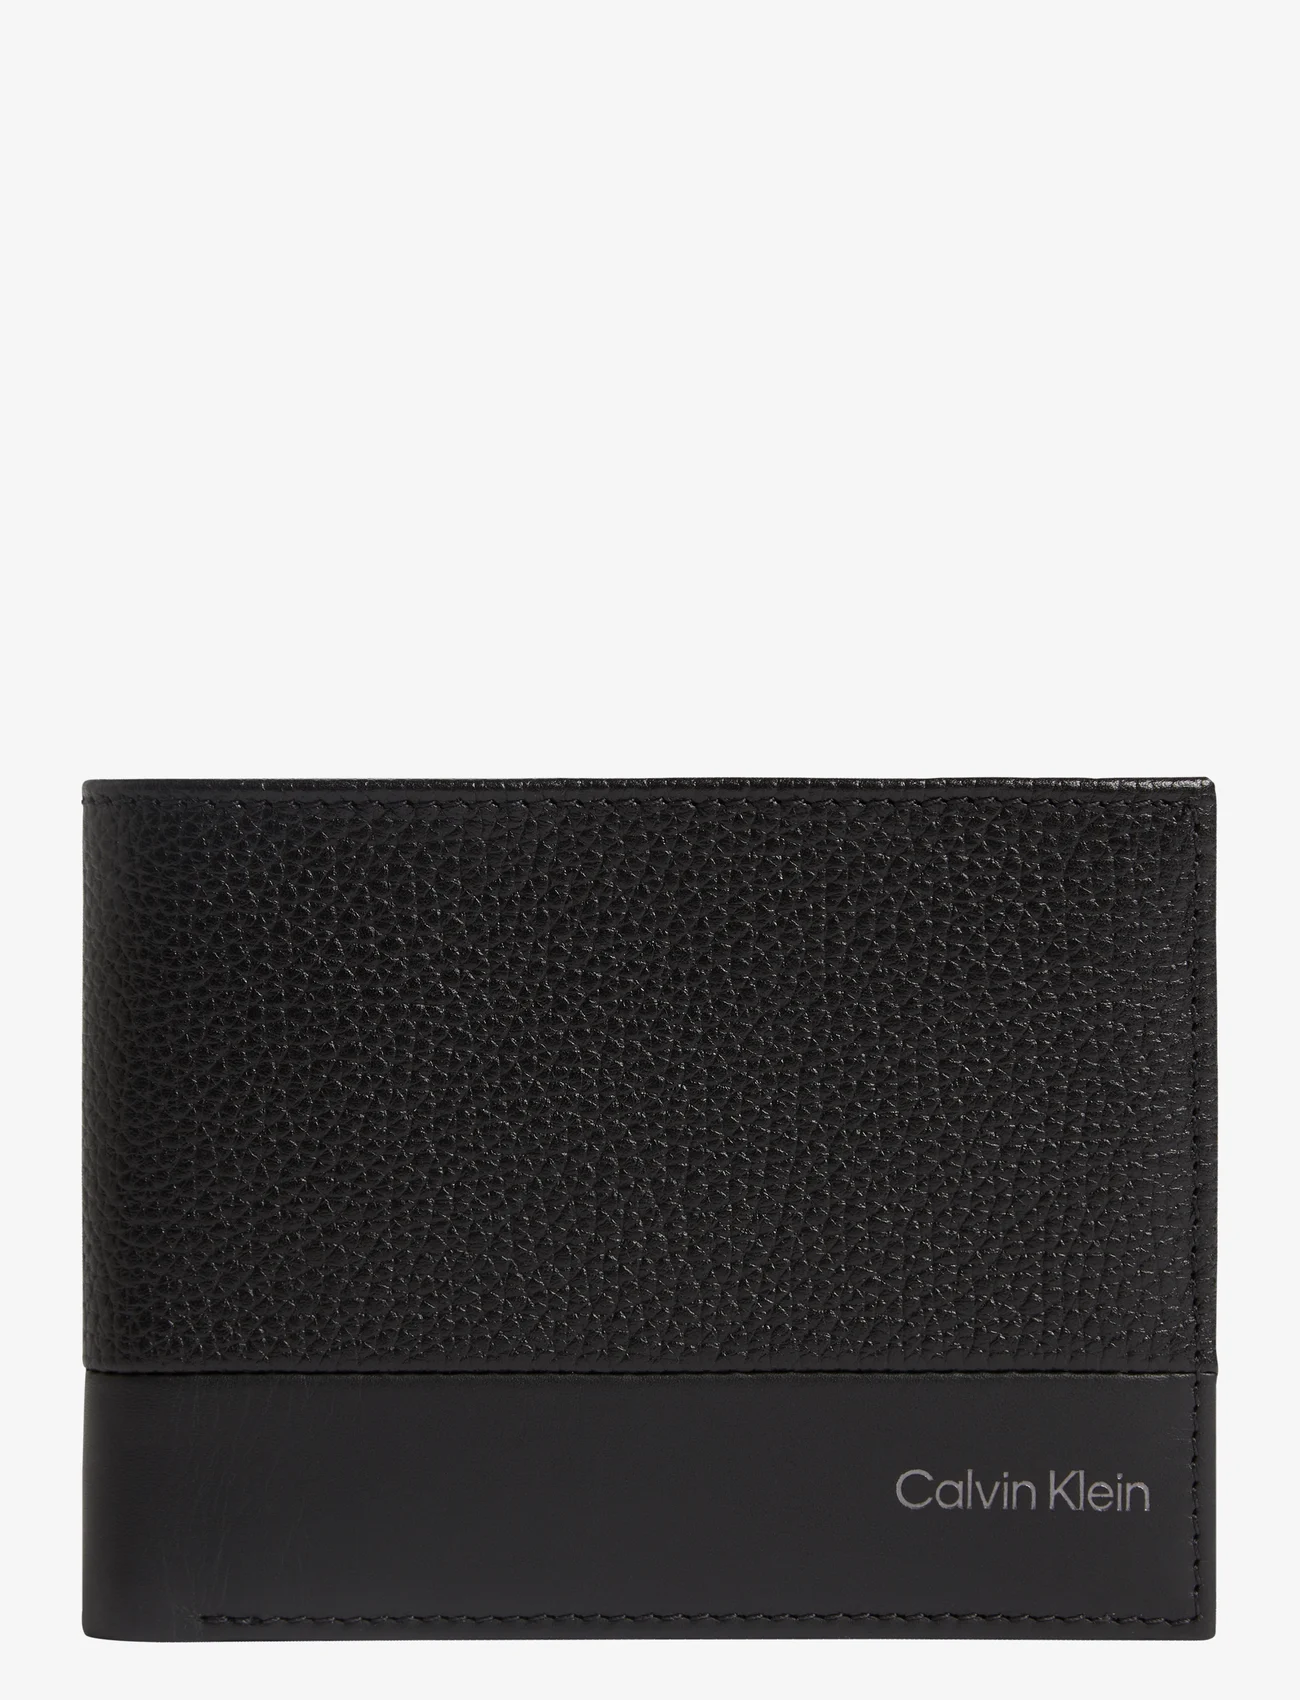 Calvin Klein - SUBTLE MIX BIFOLD 5CC W/COIN L - wallets - ck black - 0